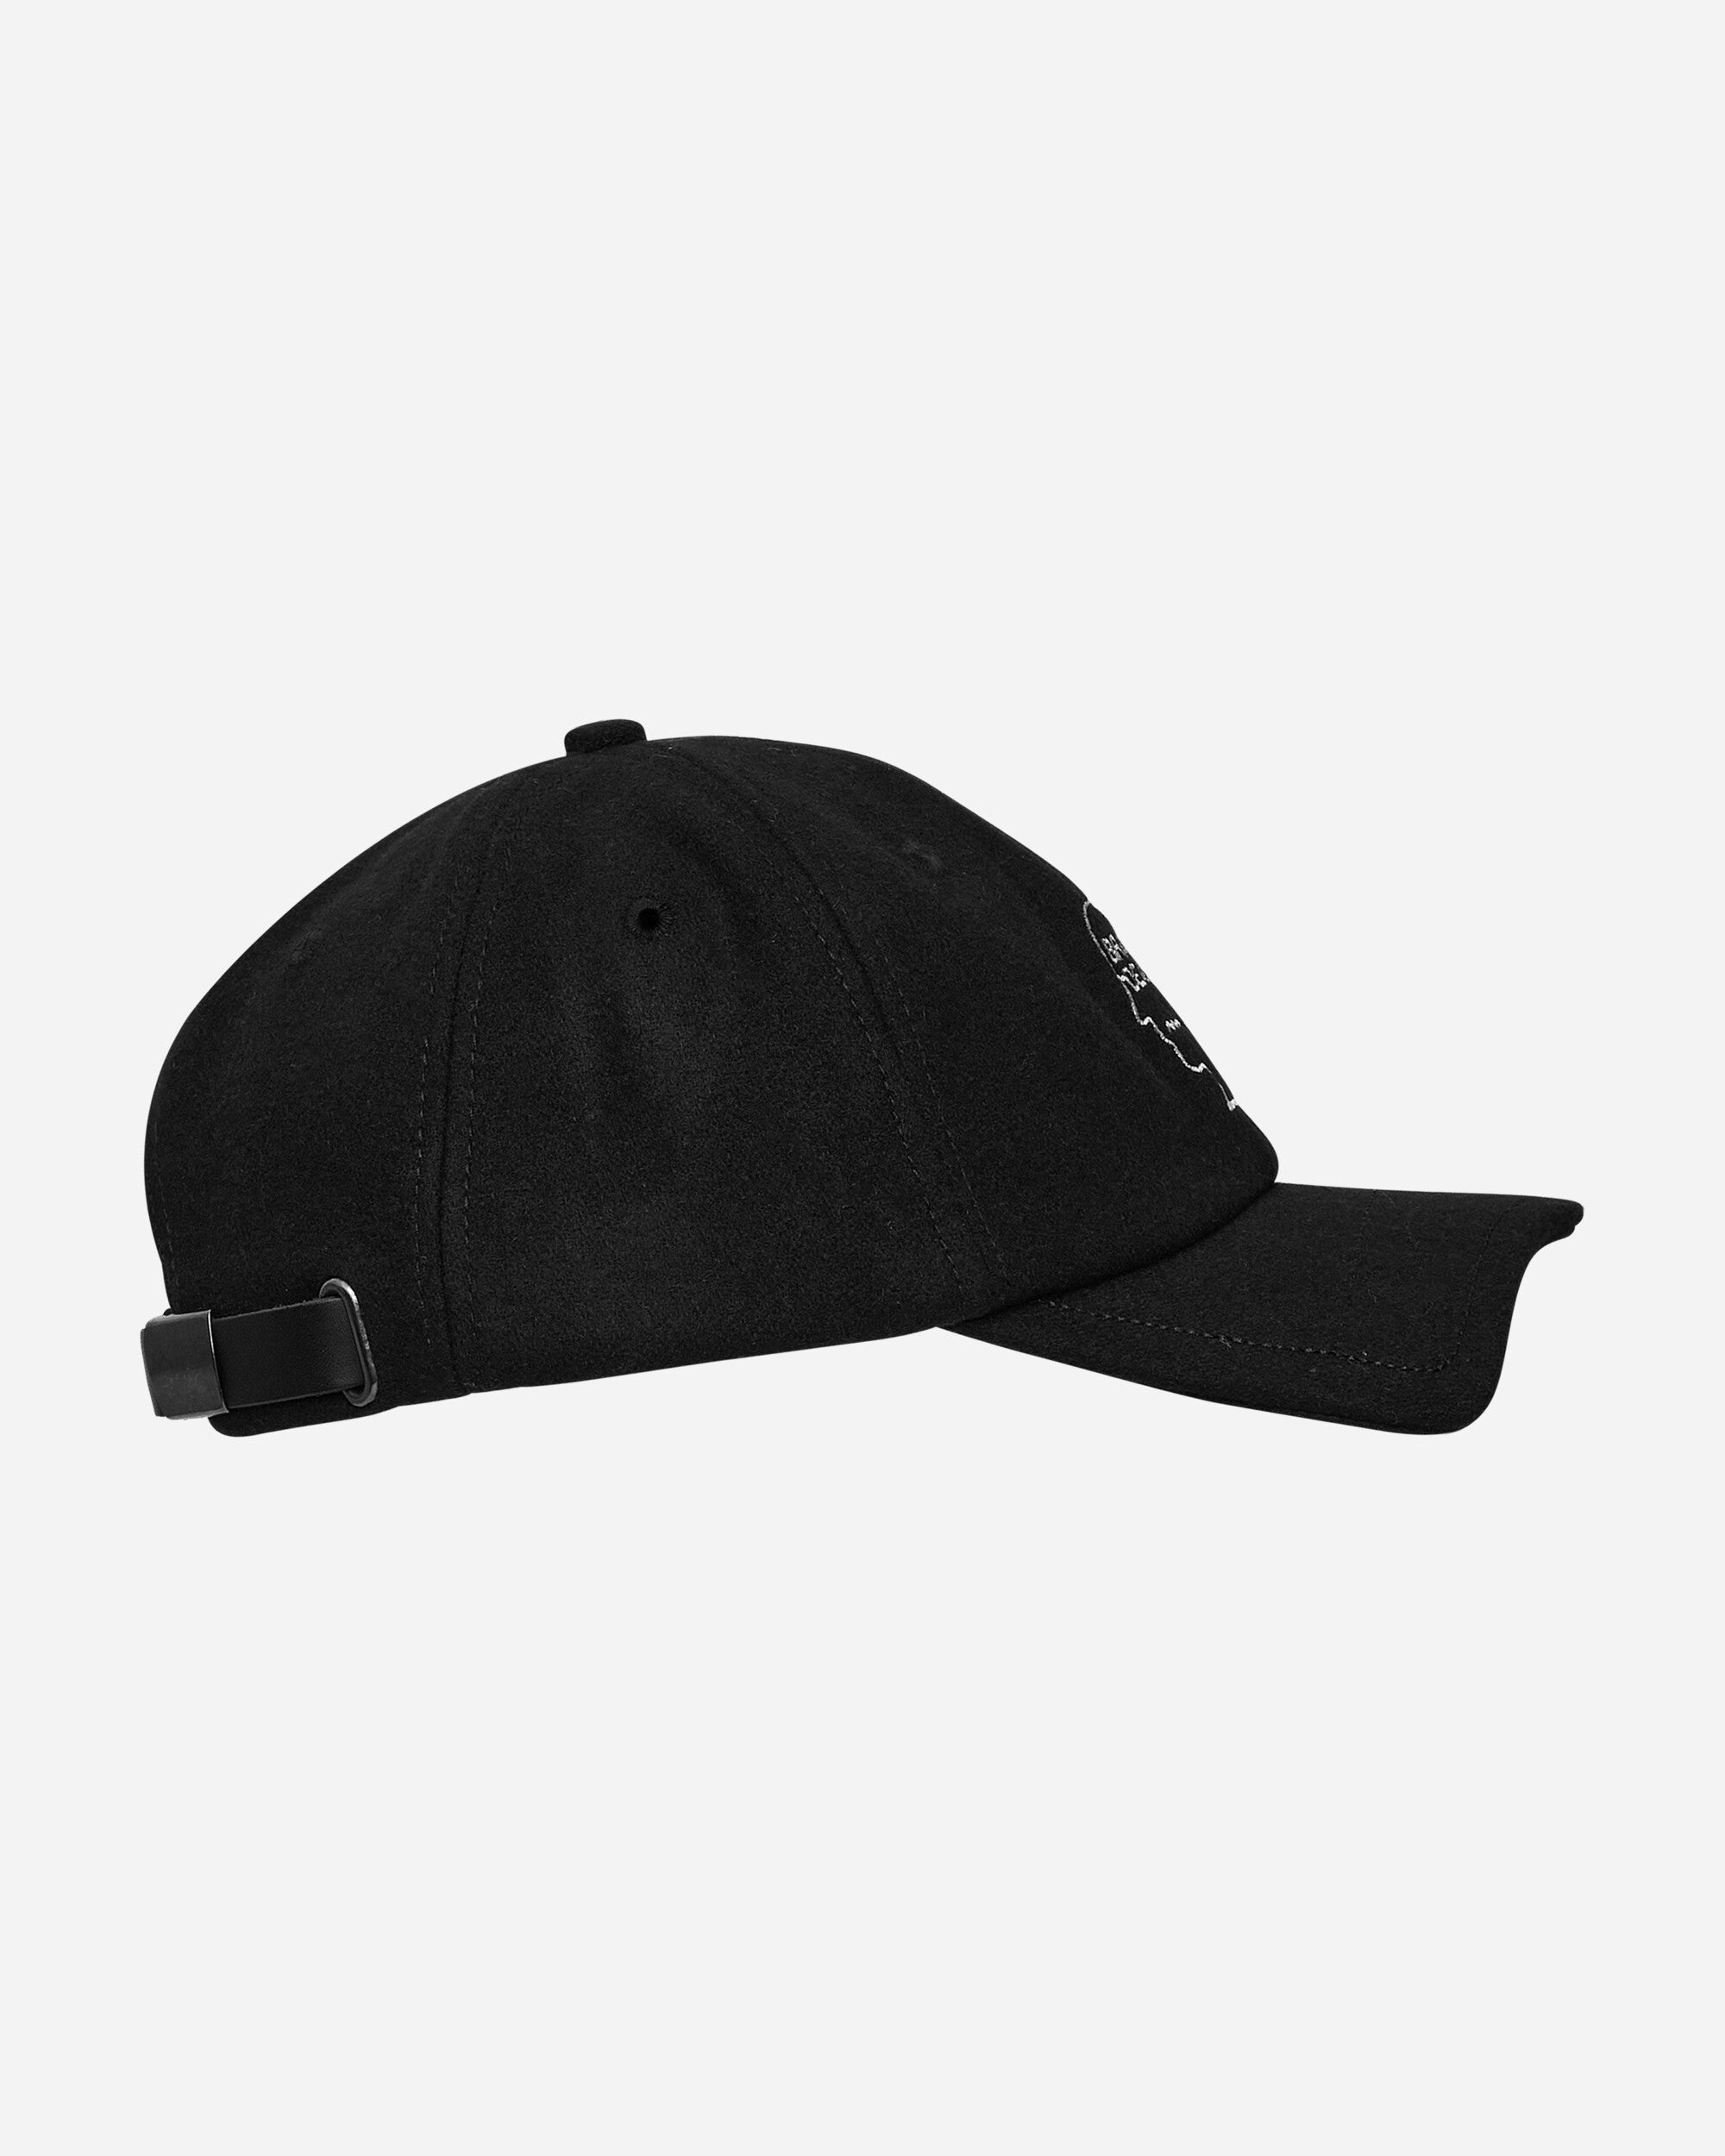 Brain Dead Batwing Logohead Hat Black Hats Caps H01003783BK BLACK